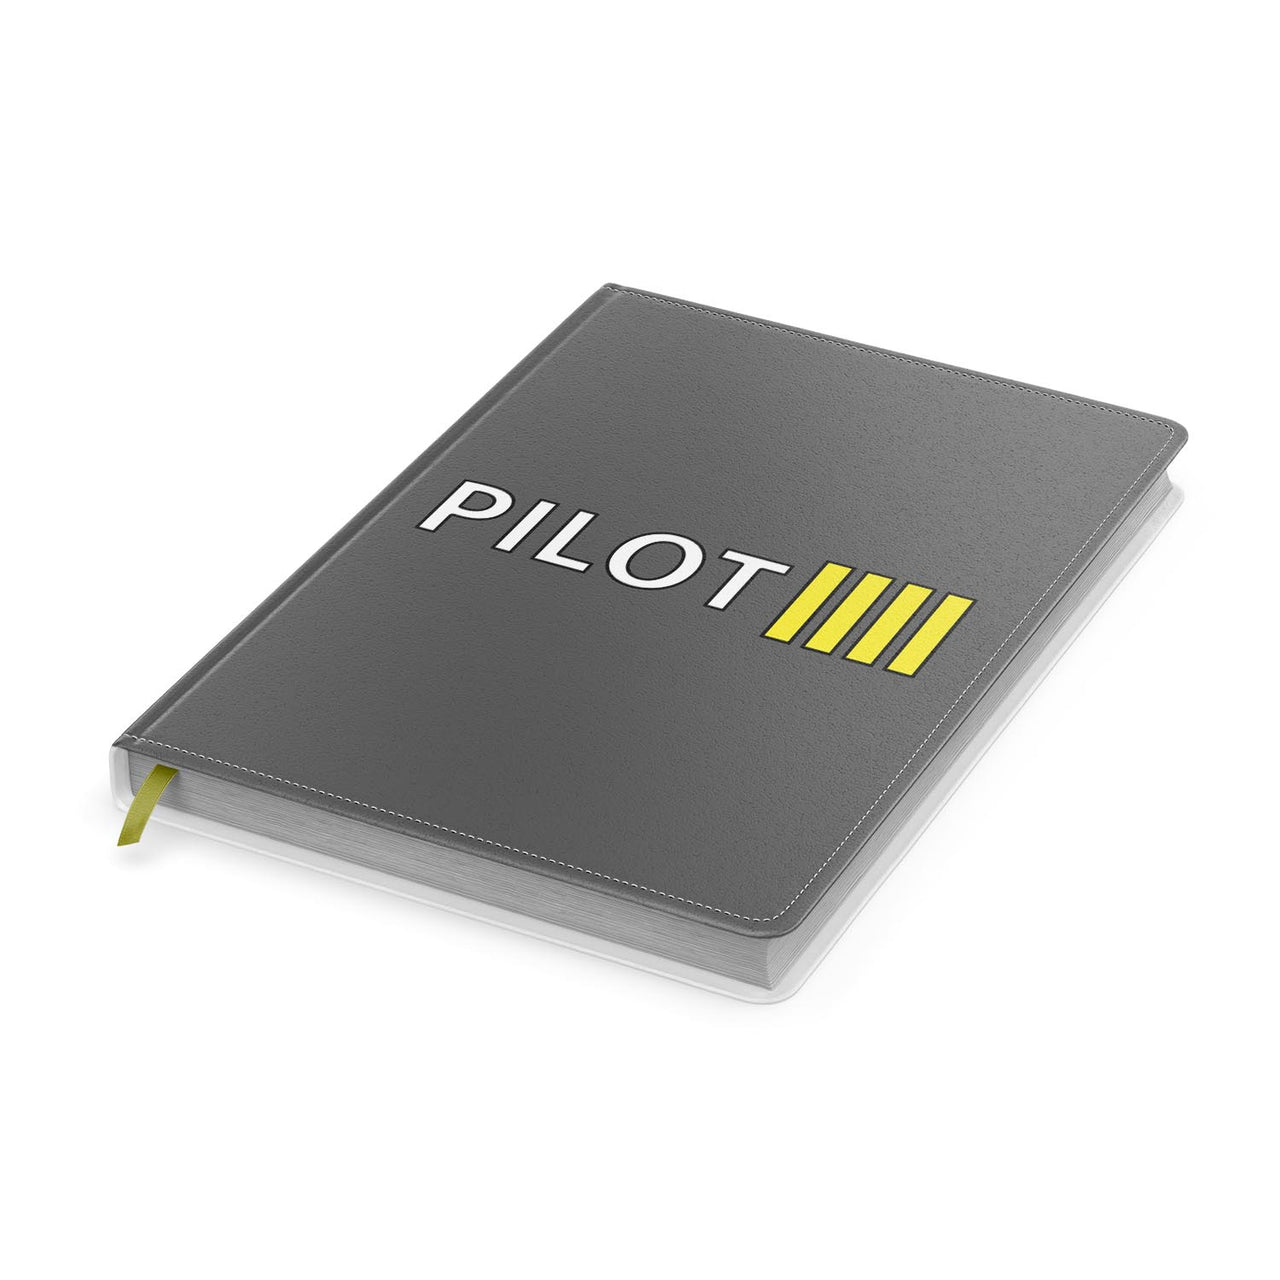 Pilot & Stripes (4 Lines) Designed Notebooks